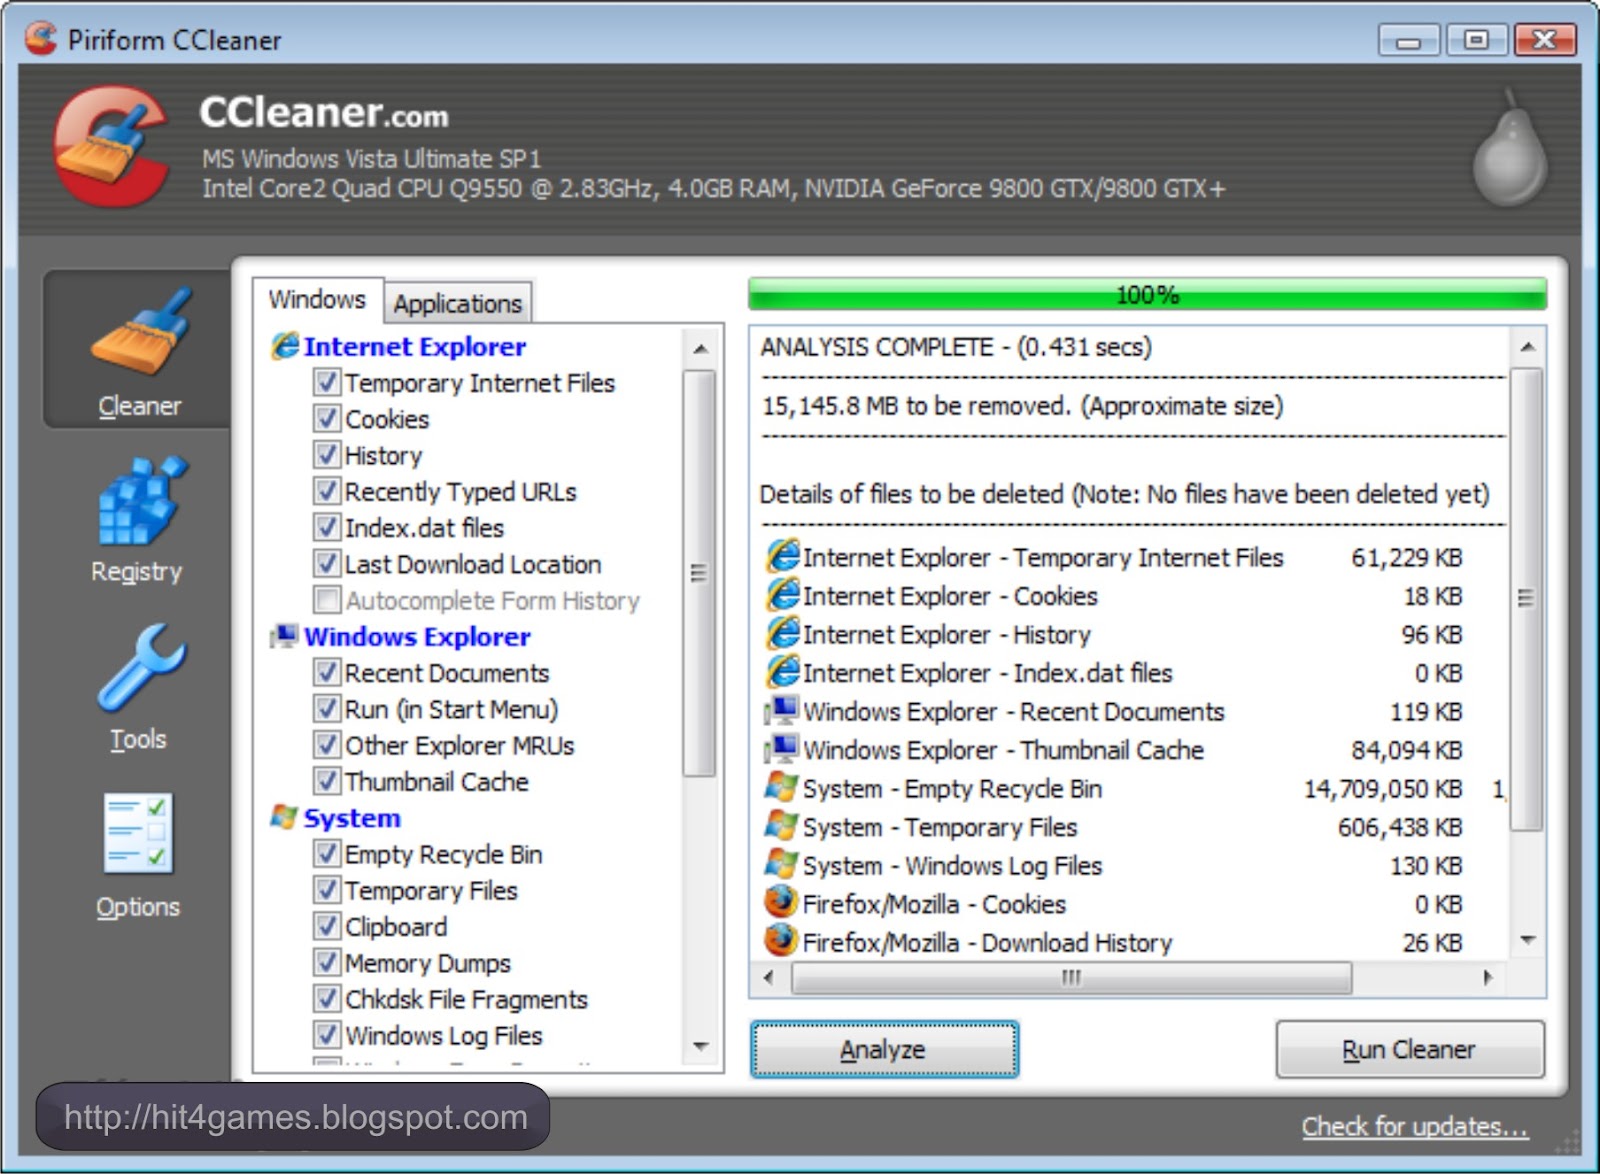 Ccleaner download free download latest version - Windows download licencia para ccleaner de piriform setup free download for